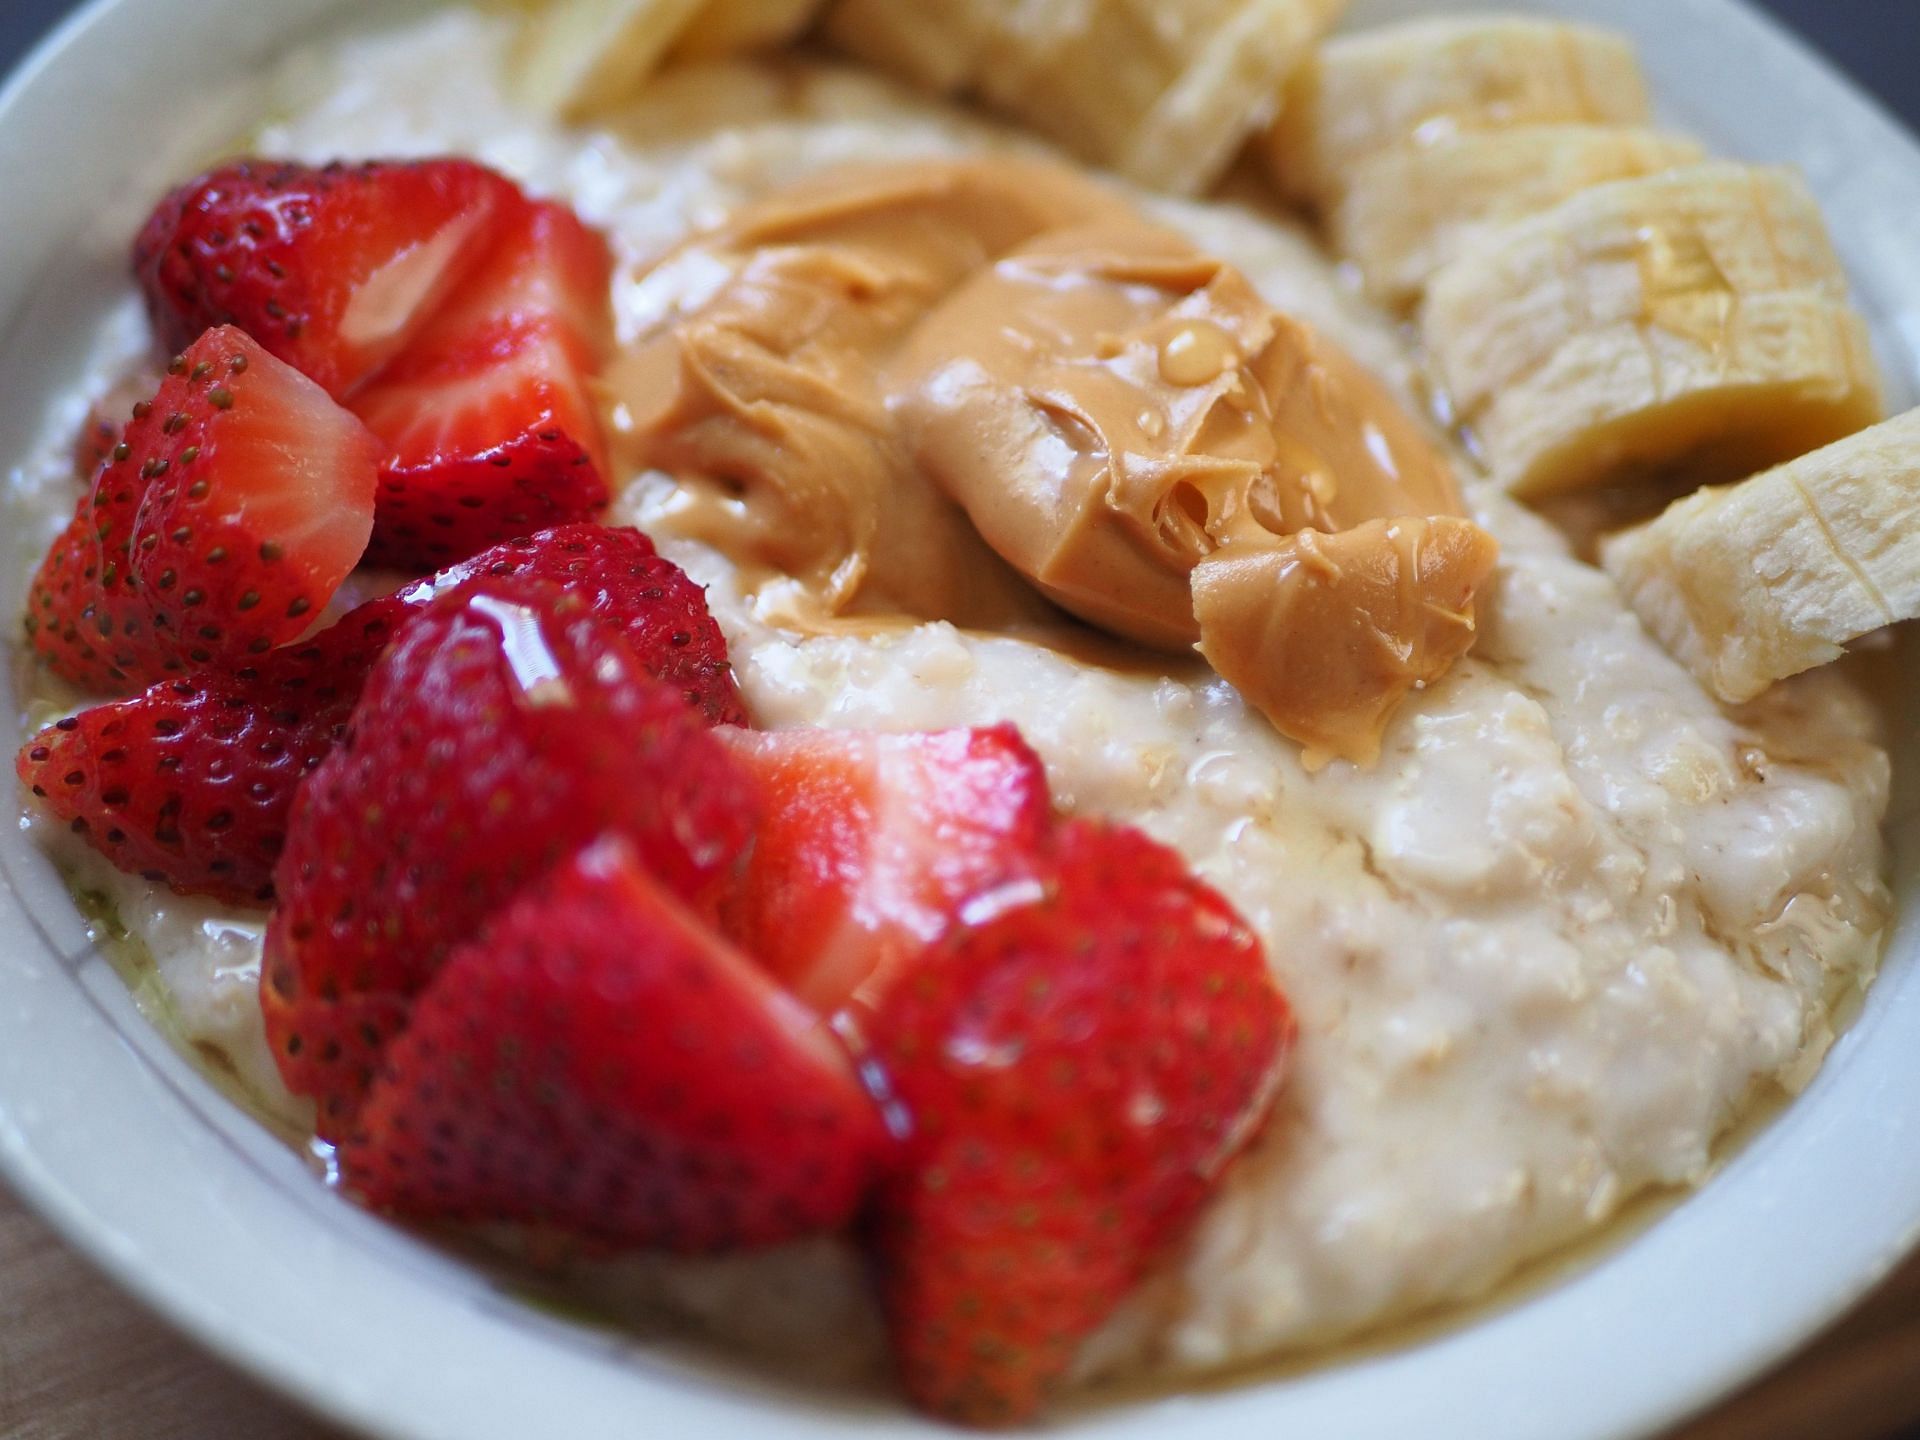 Is oatmeal good for constipation? (Image via Unsplash / Lucie Rangel)